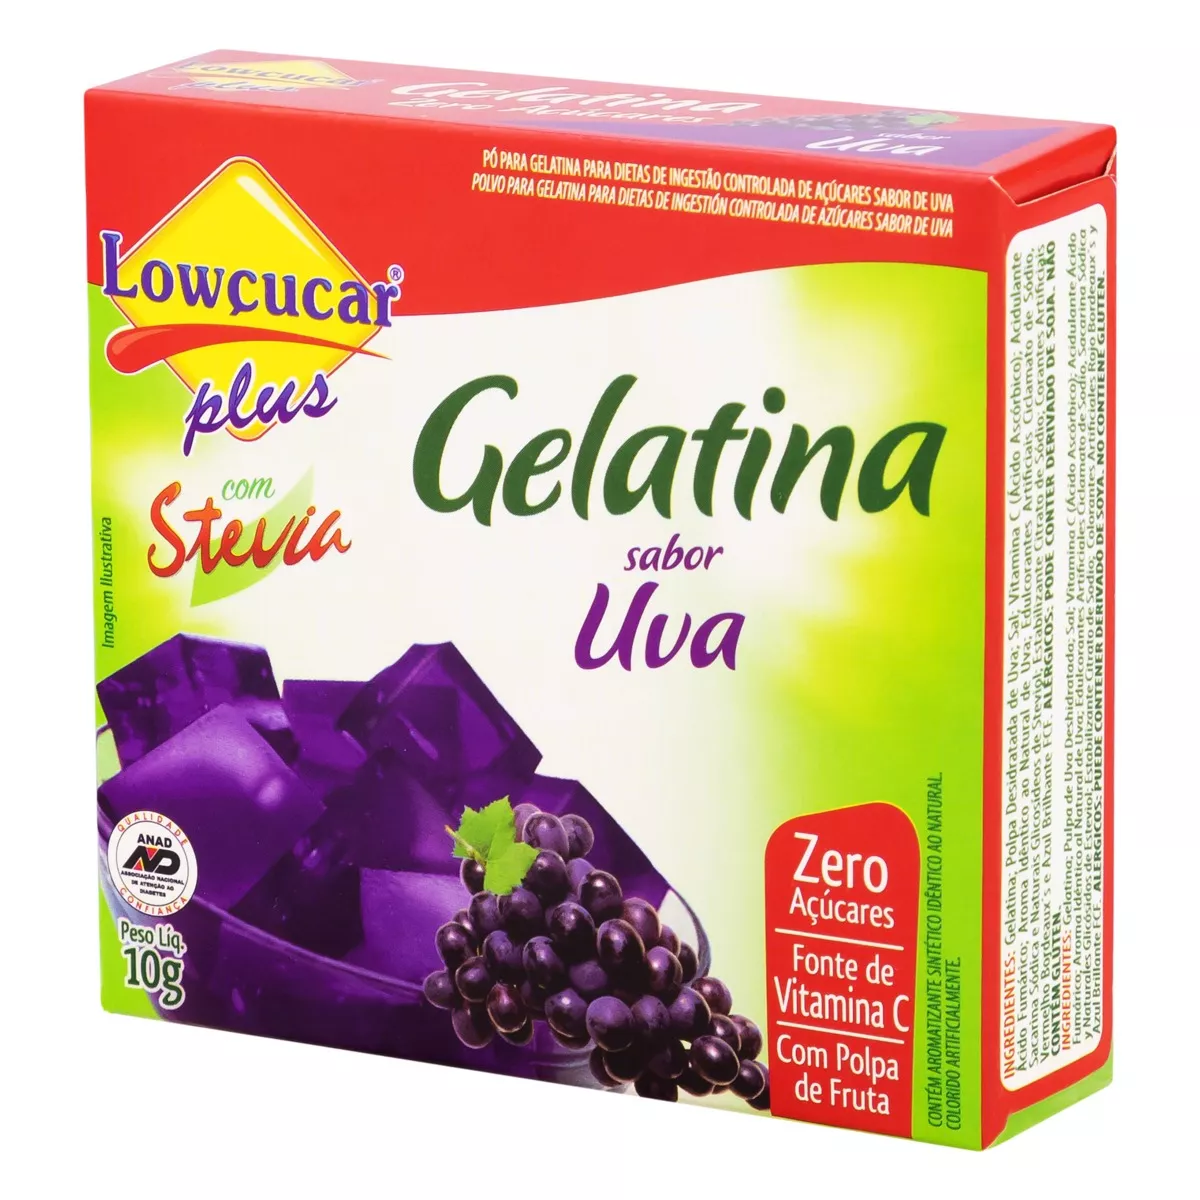 Segunda imagem para pesquisa de gelatina diet